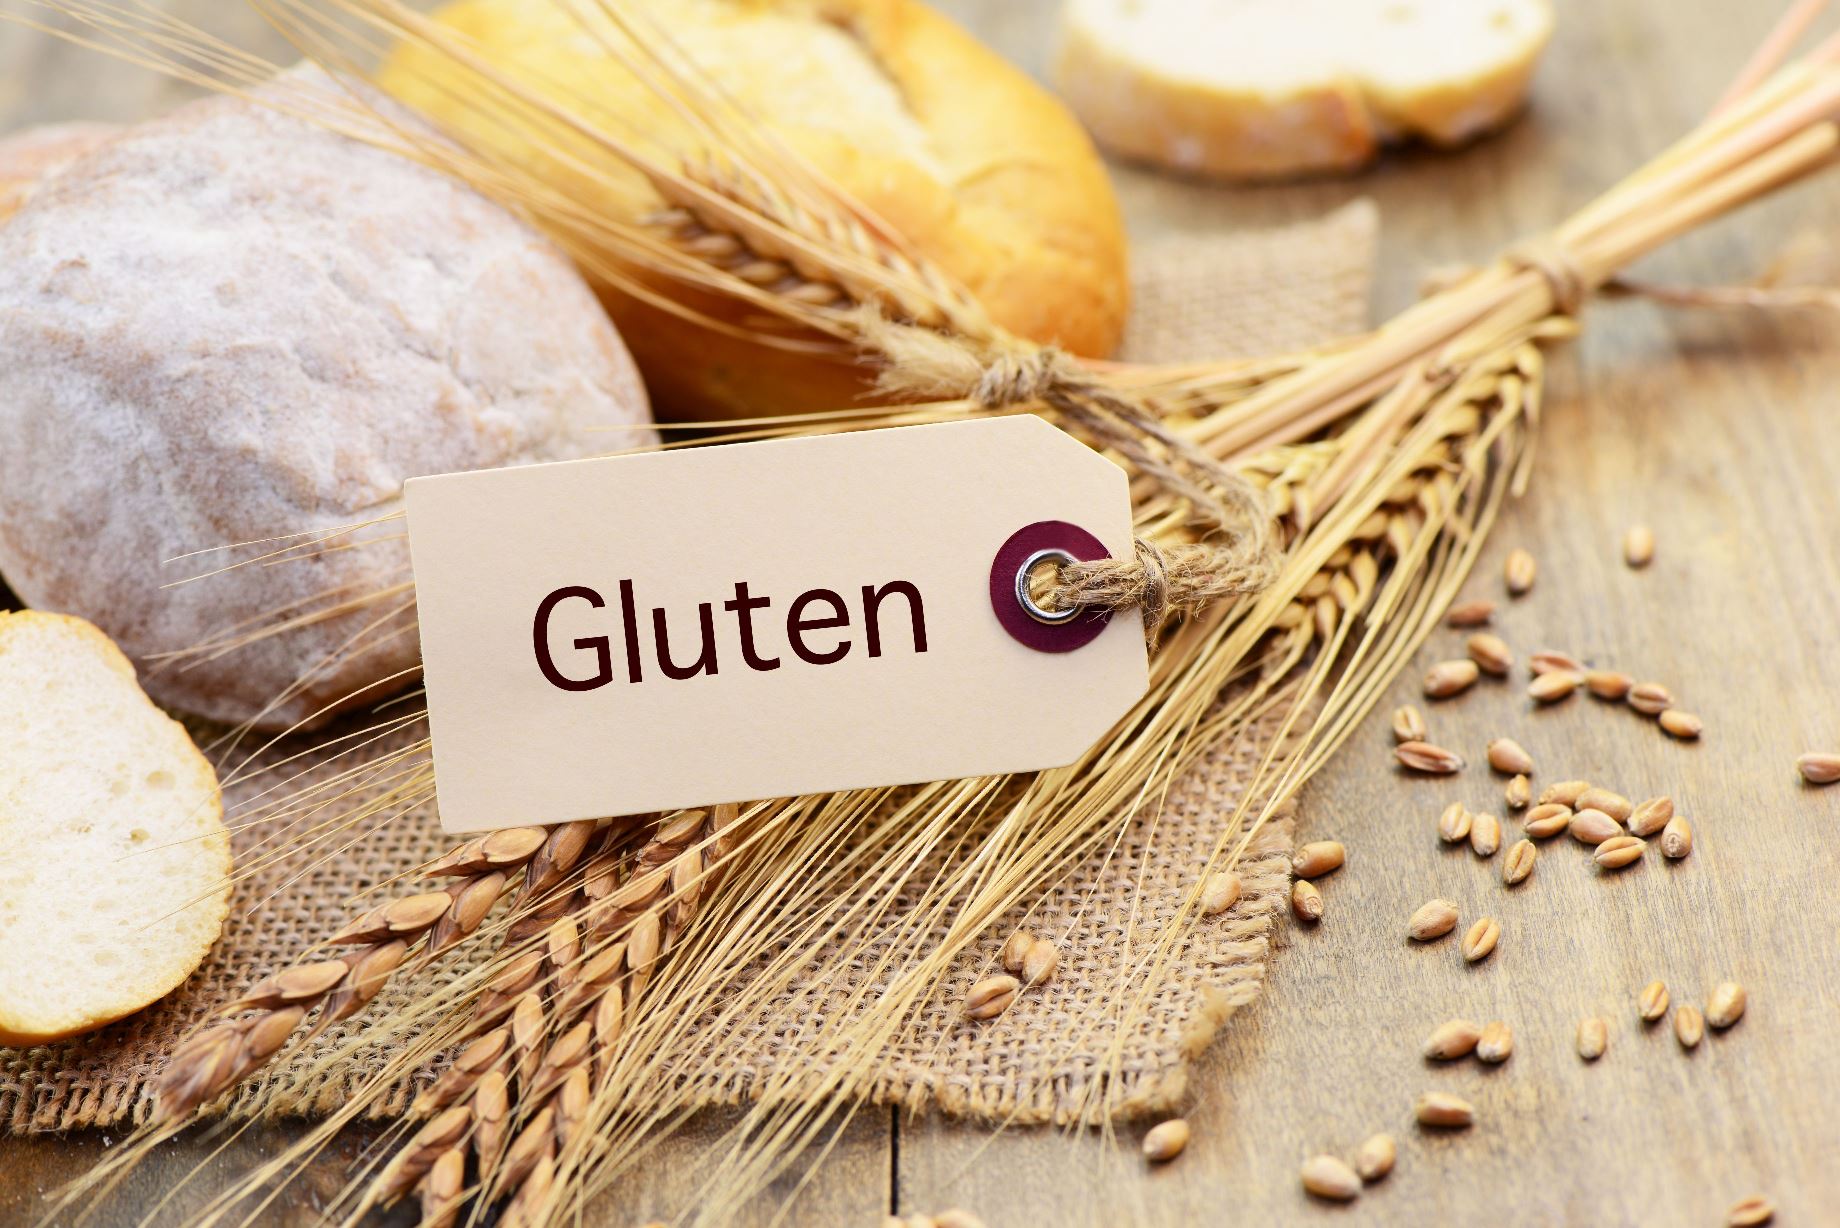 Why Gluten is Bad For Health,10 Harmful Effects,Gluten-free Diet